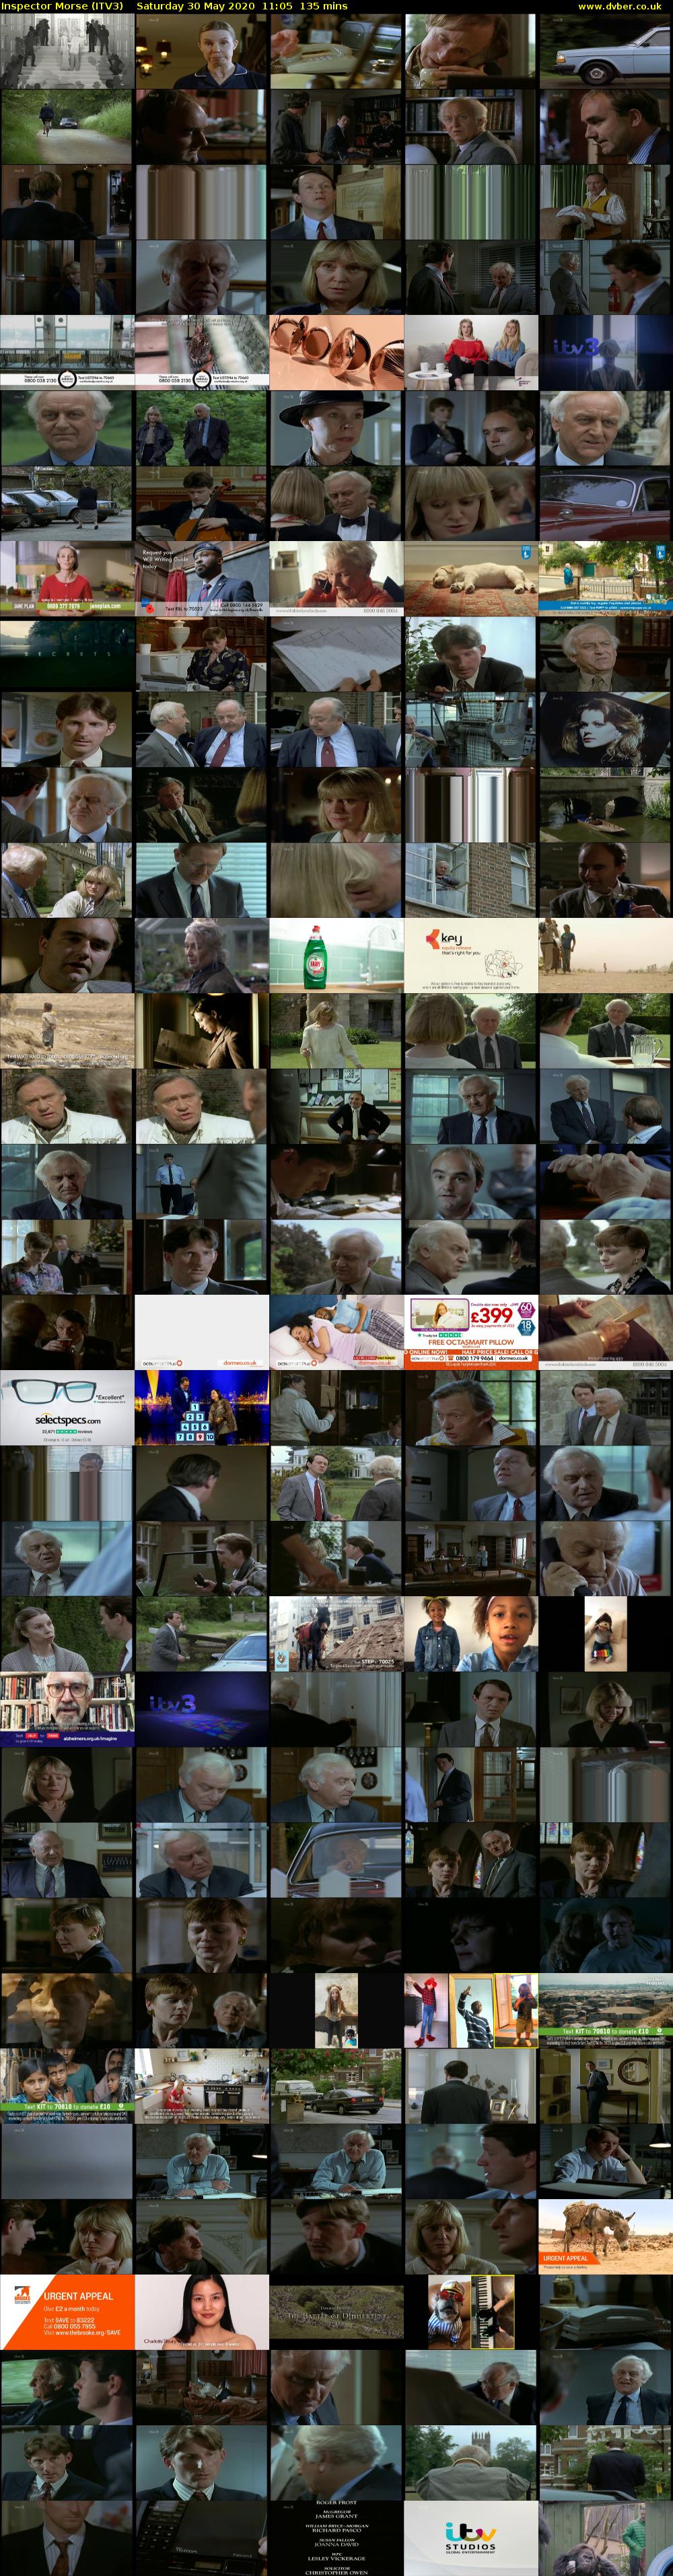 Inspector Morse (ITV3) Saturday 30 May 2020 11:05 - 13:20